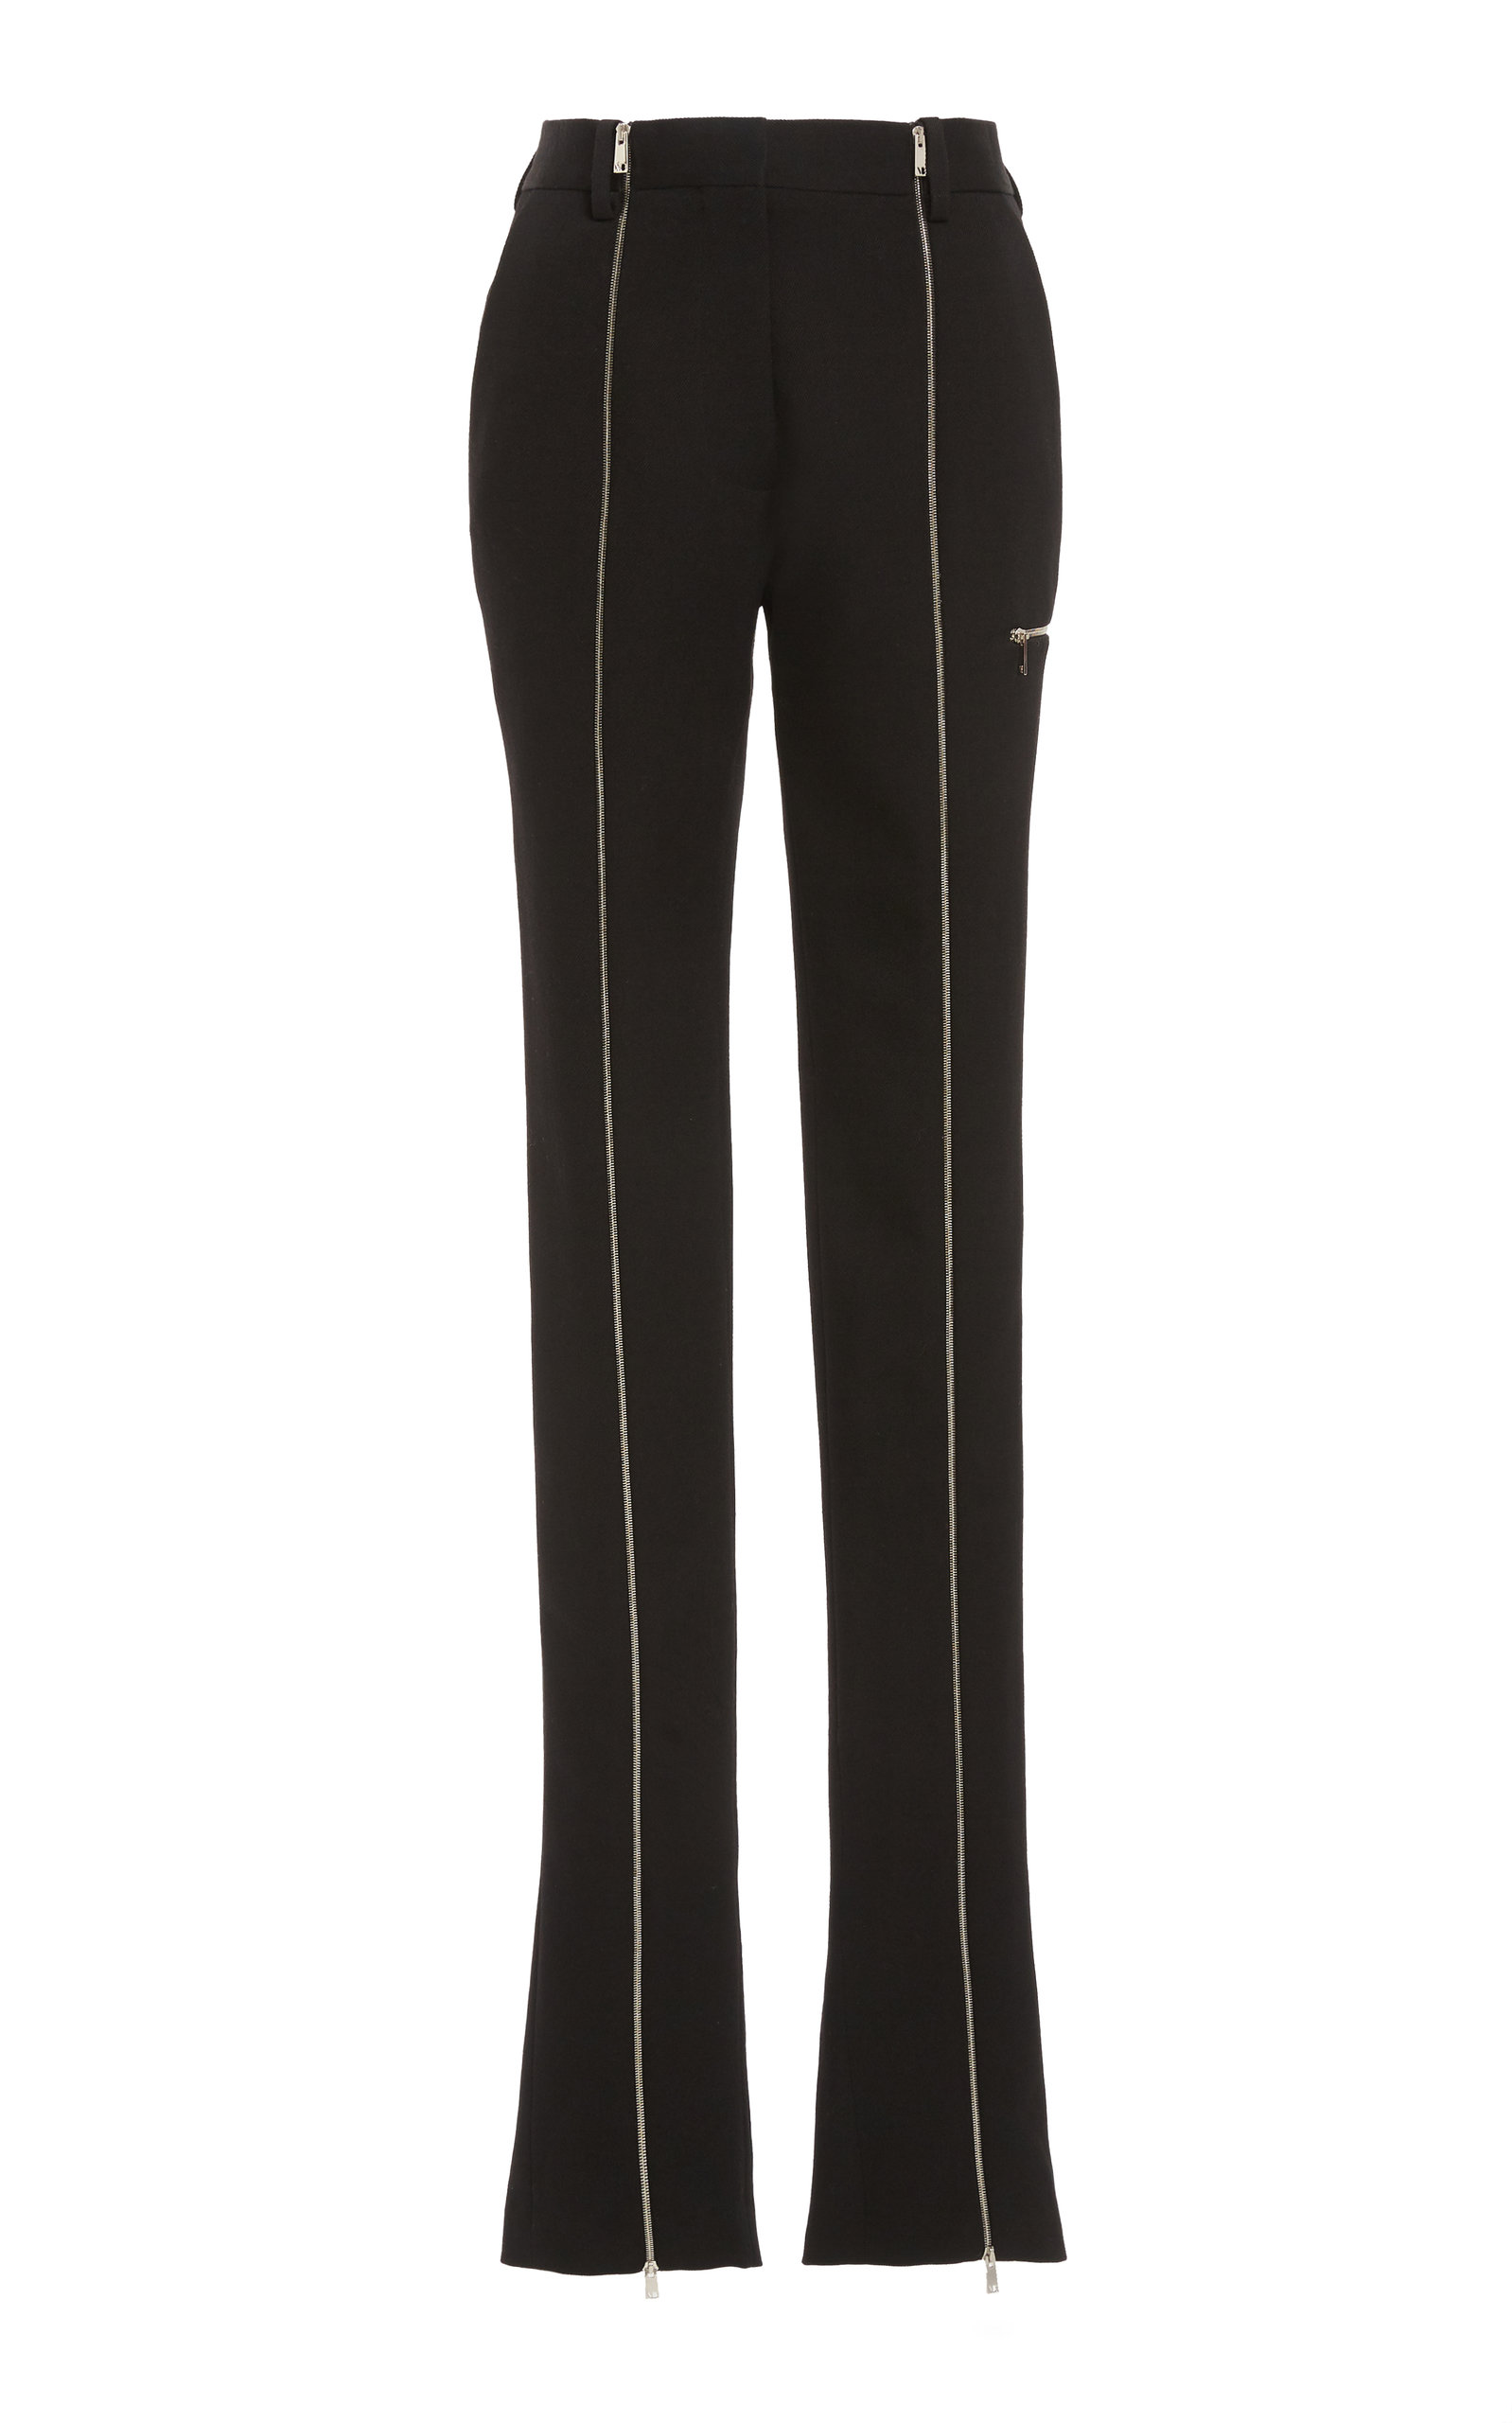 Victoria Beckham Women's Zip-Detailed Wool Pants